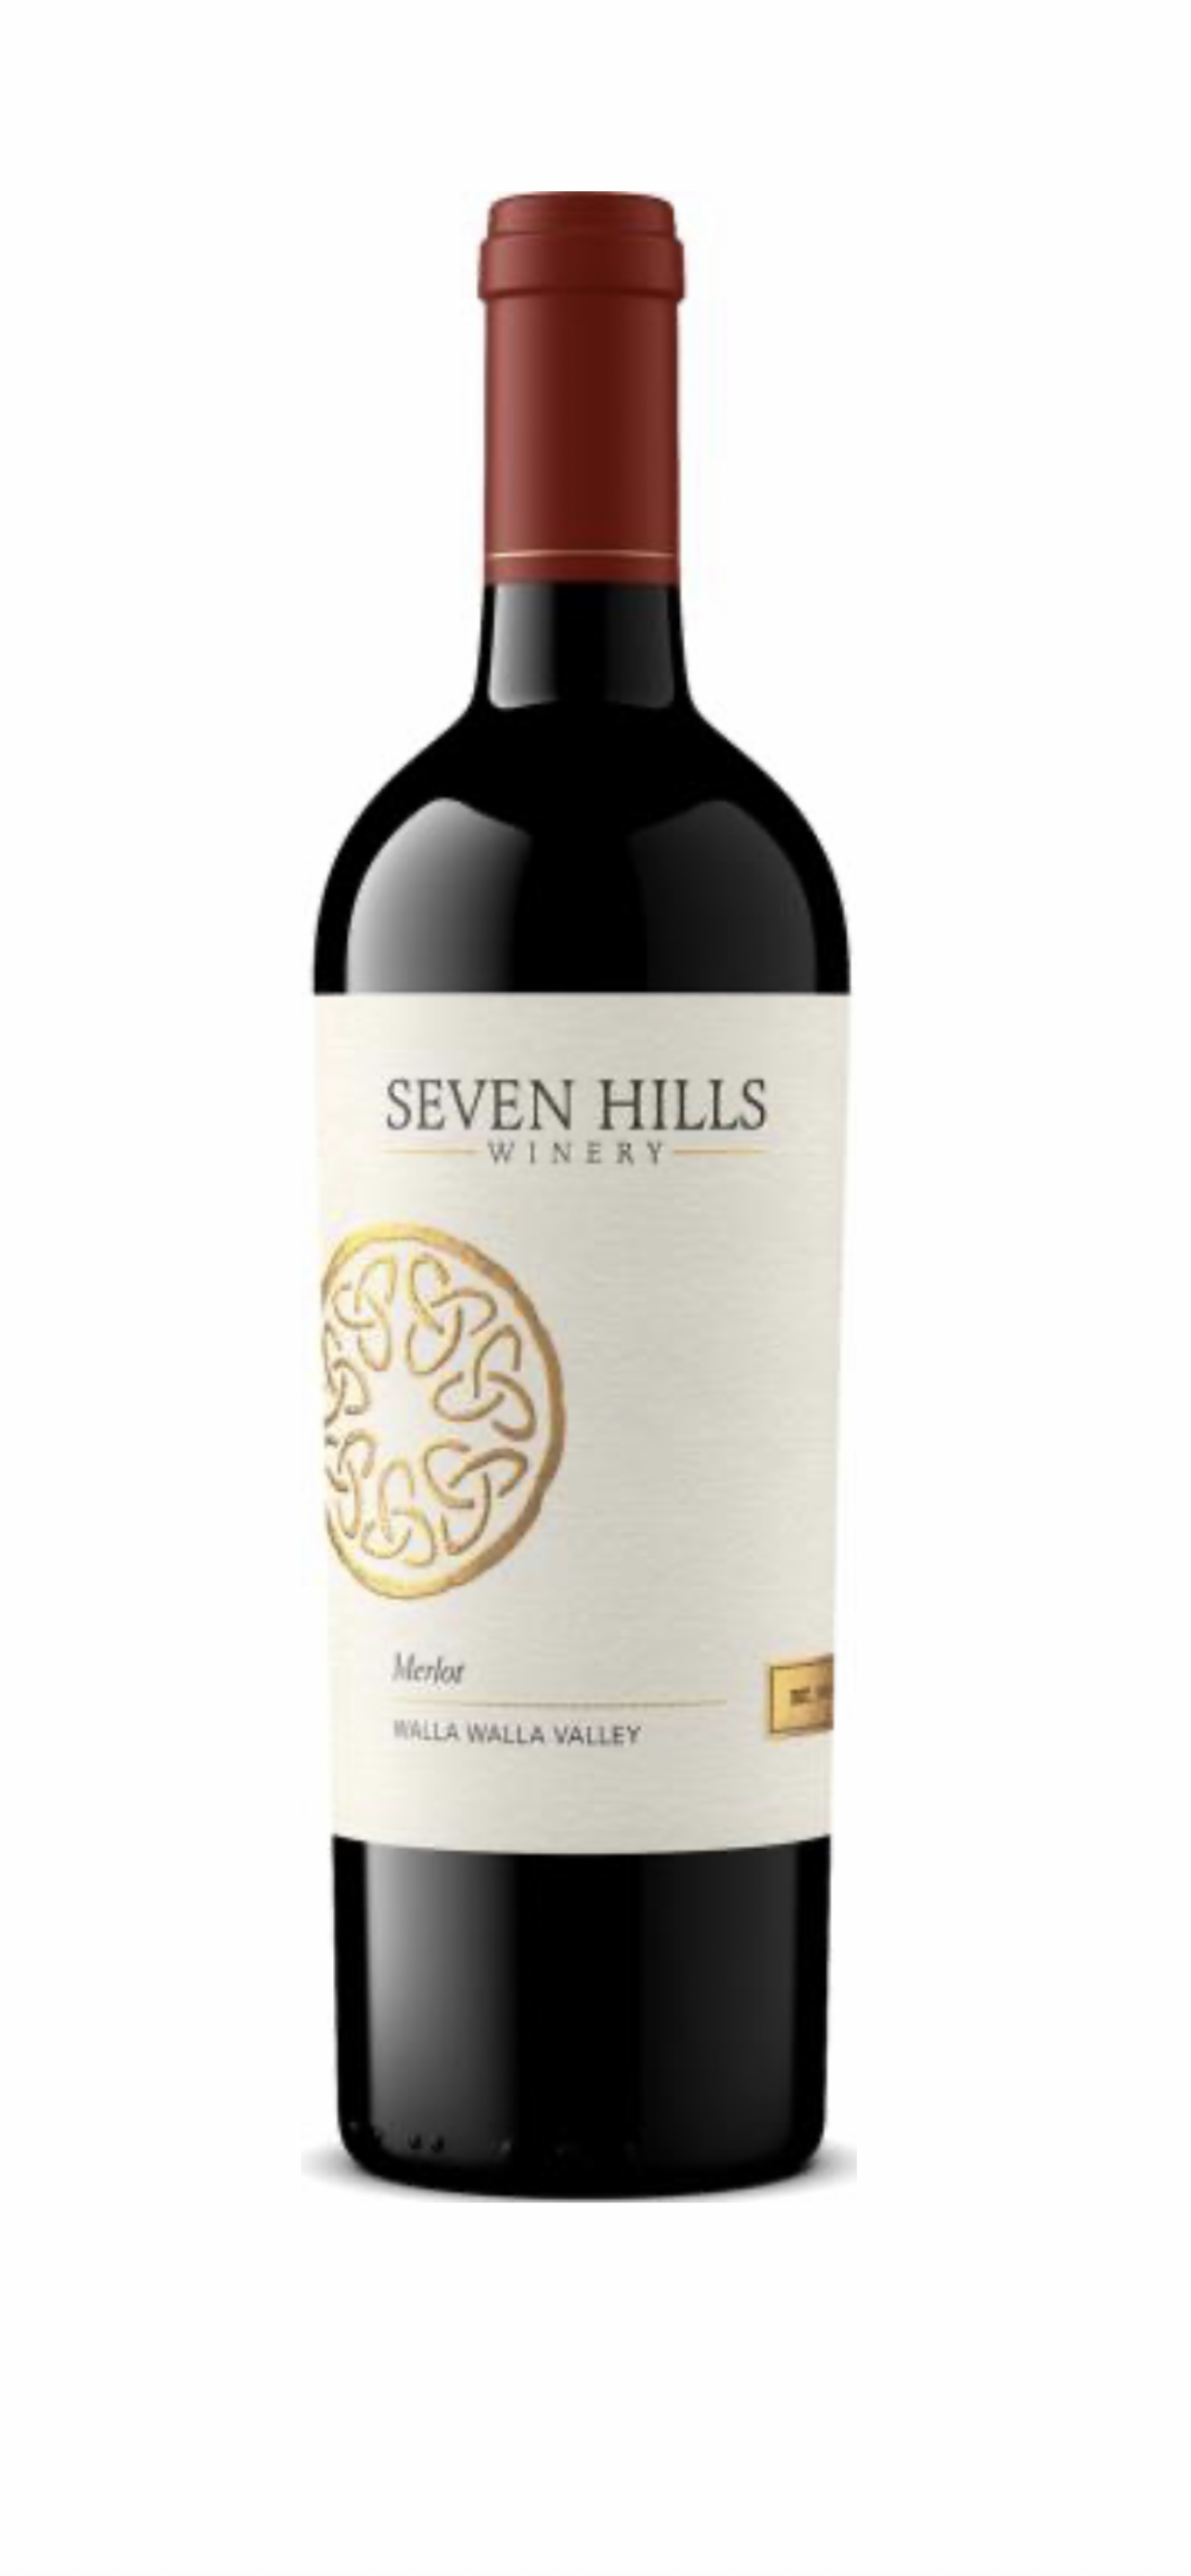 2021 Walla Walla Merlot
Seven Hills Winery